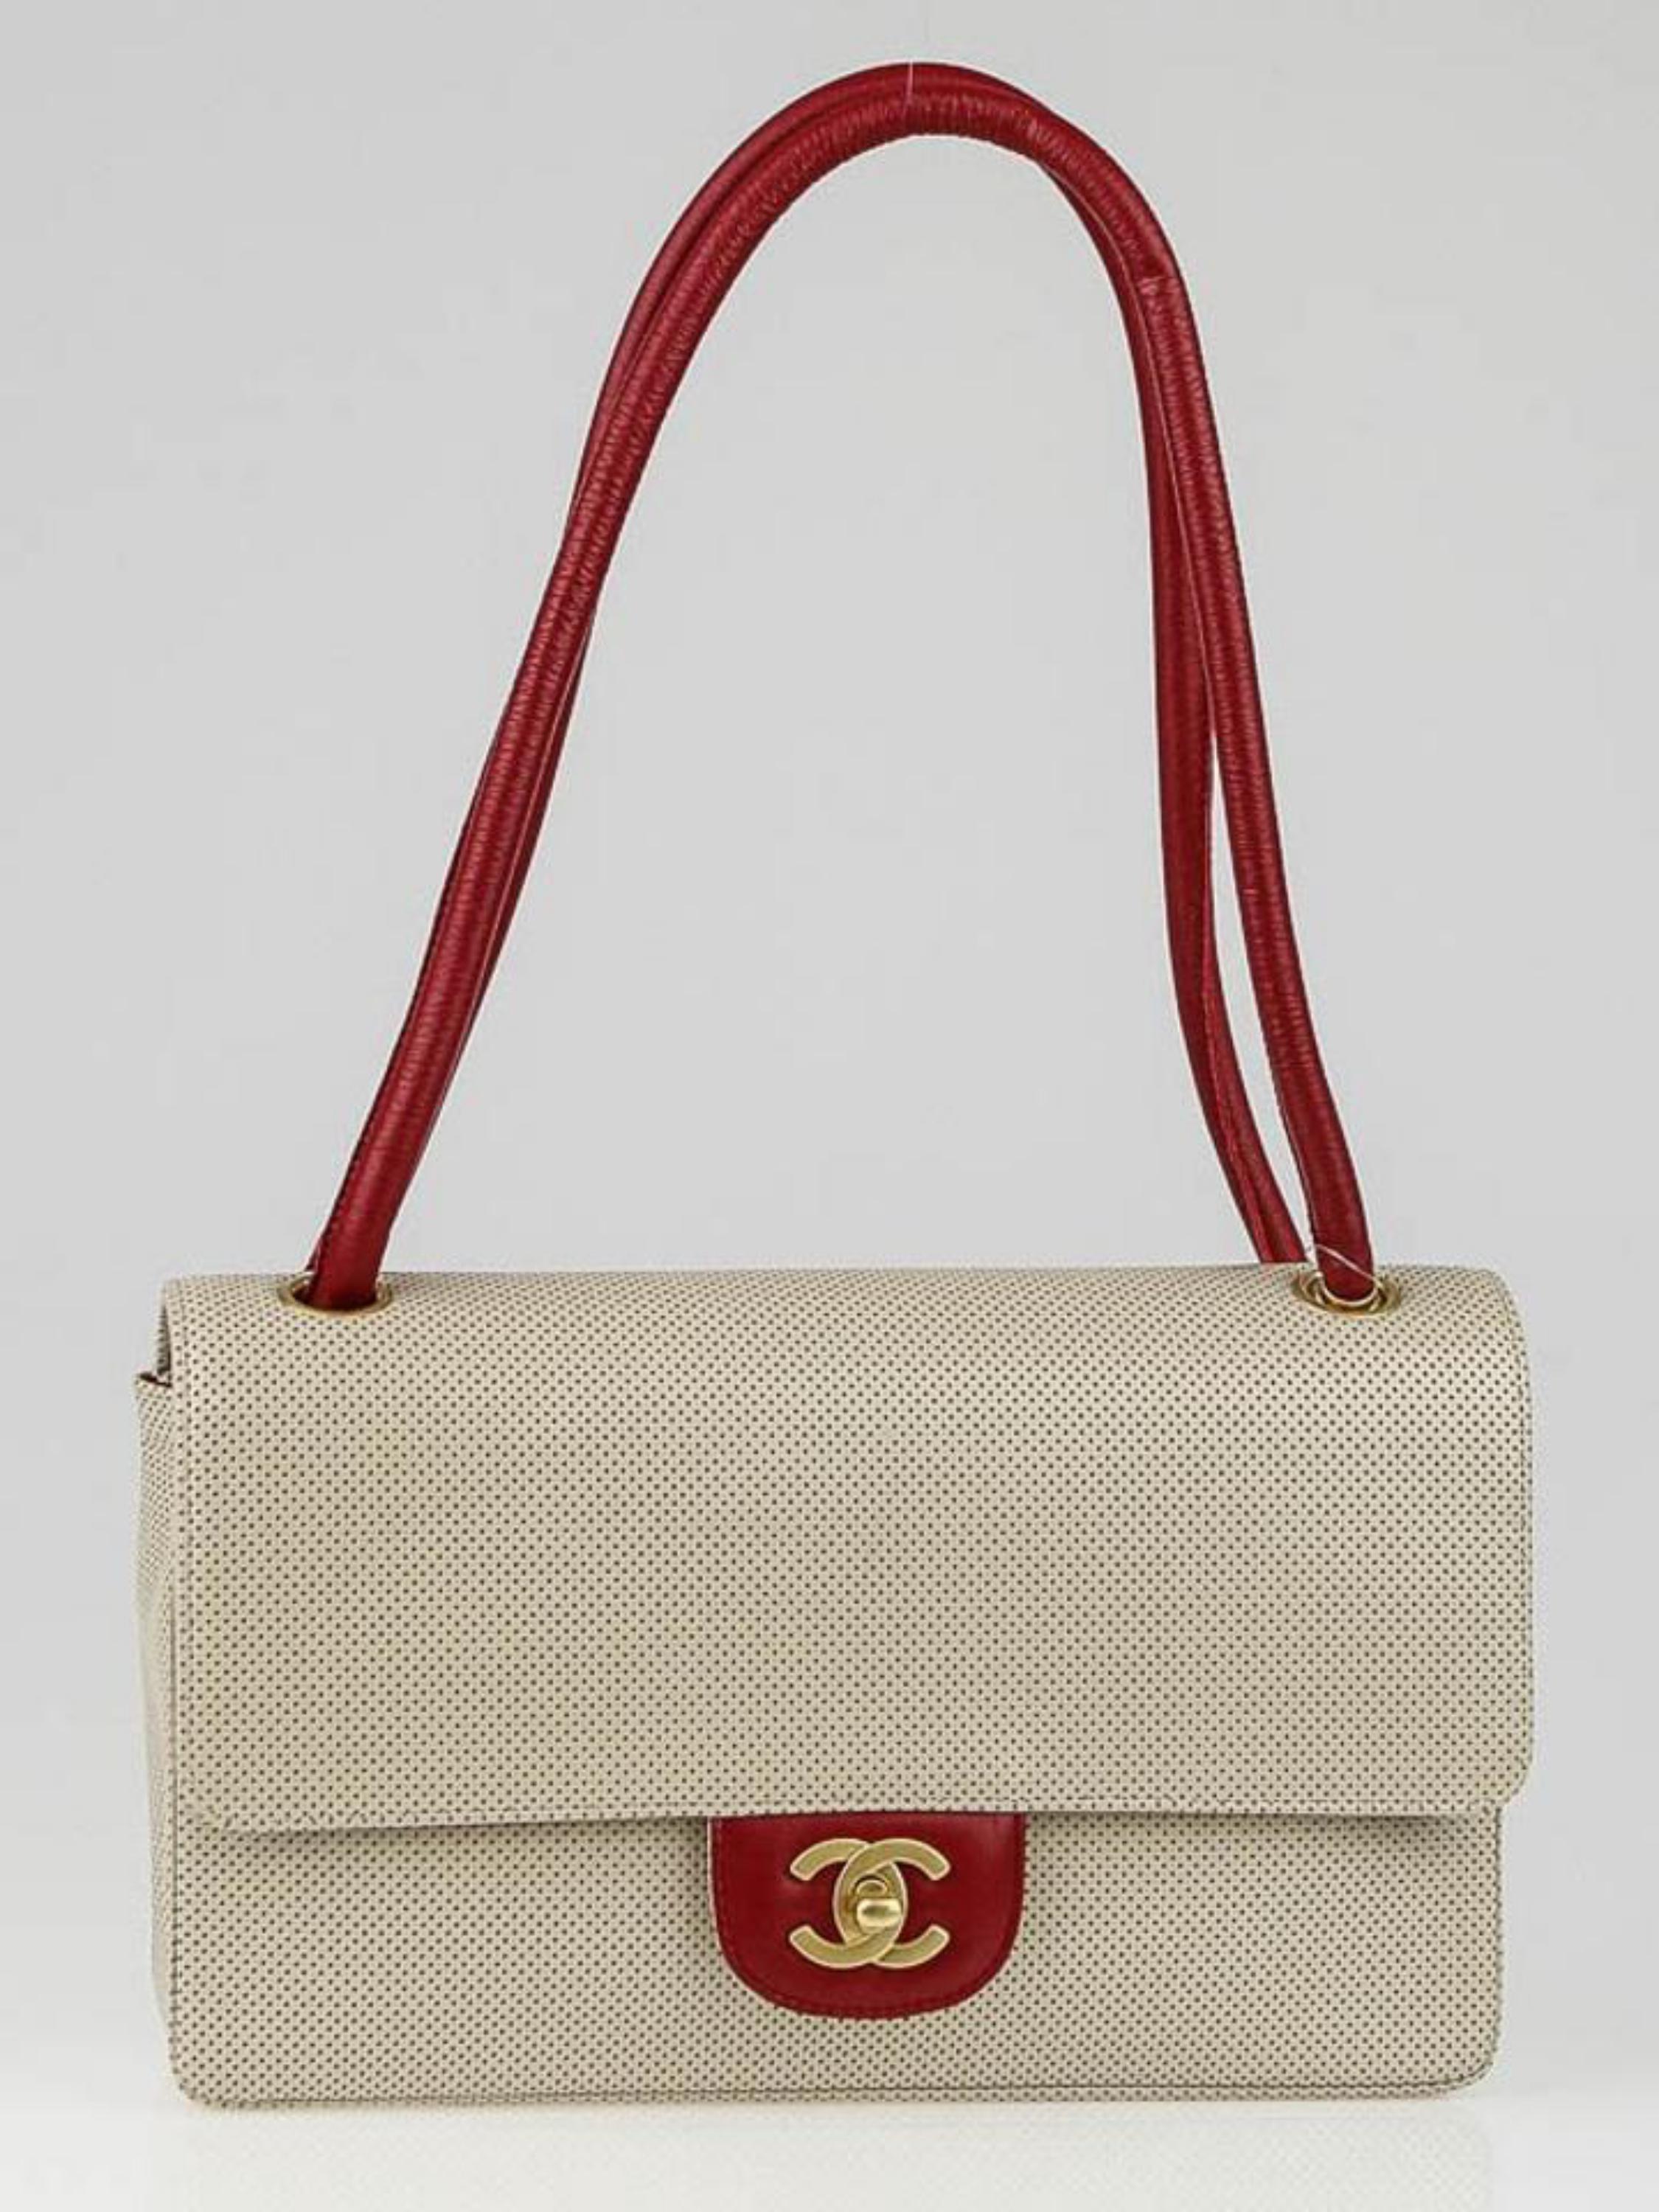 Chanel Classic Bicolor Perforated Medium Flap 216613 Beige Leather Shoulder Bag For Sale 8